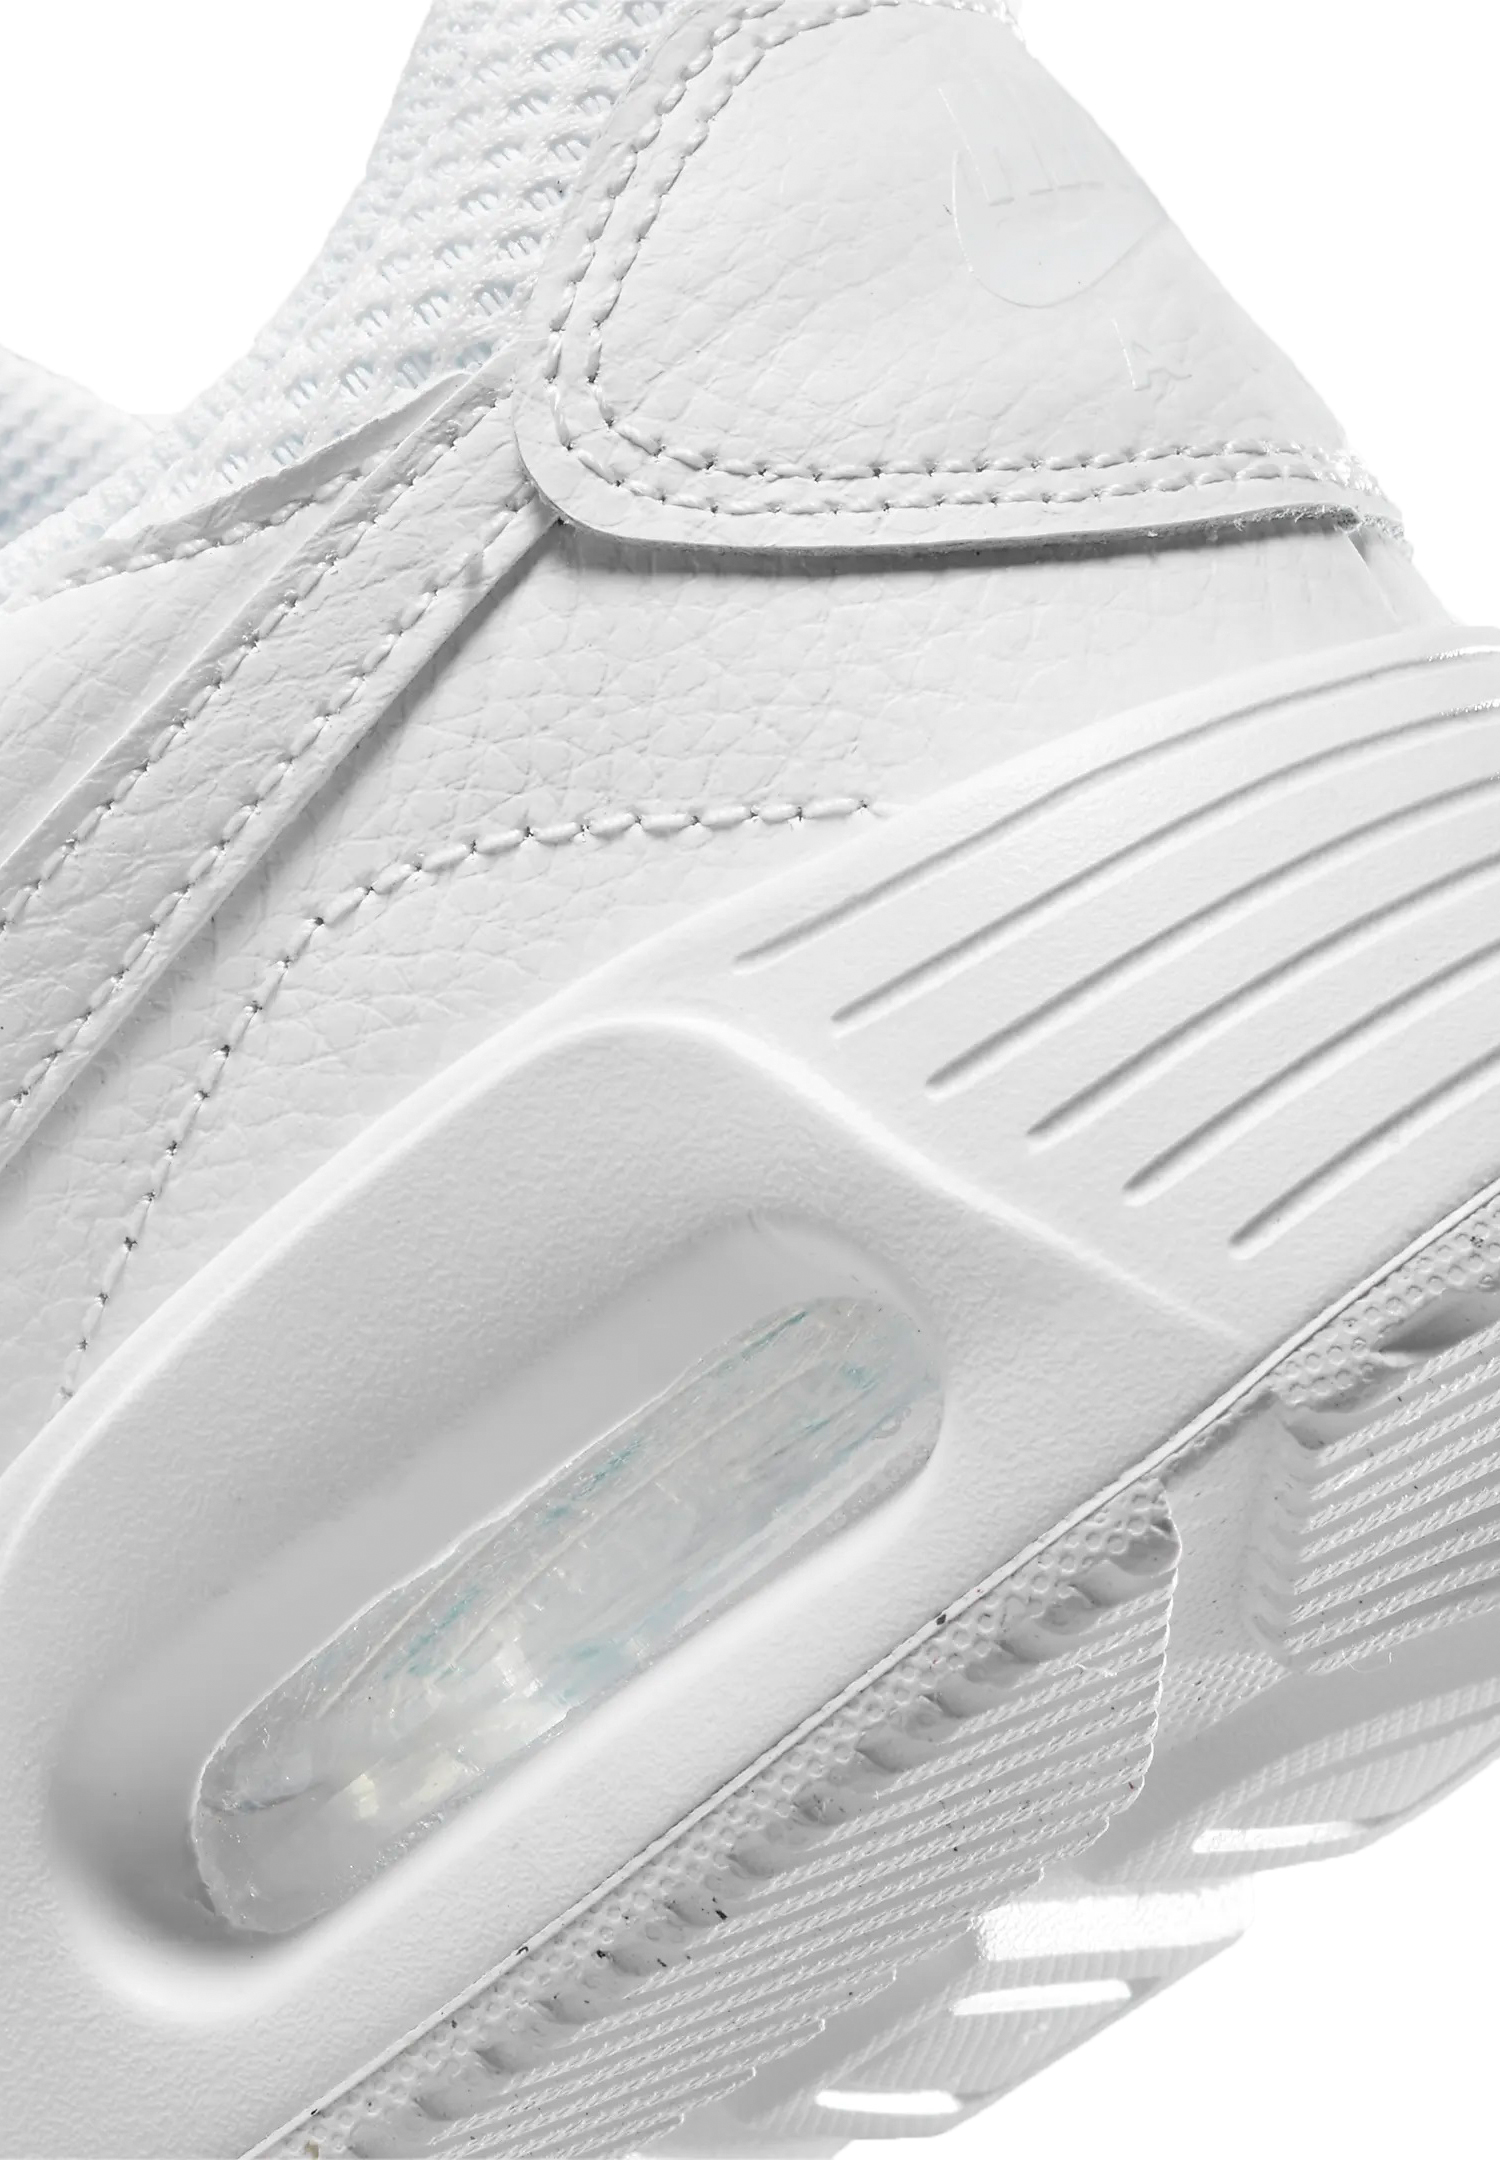 Nike AIR MAX SC Damen Sneaker CW4554 101 weiss